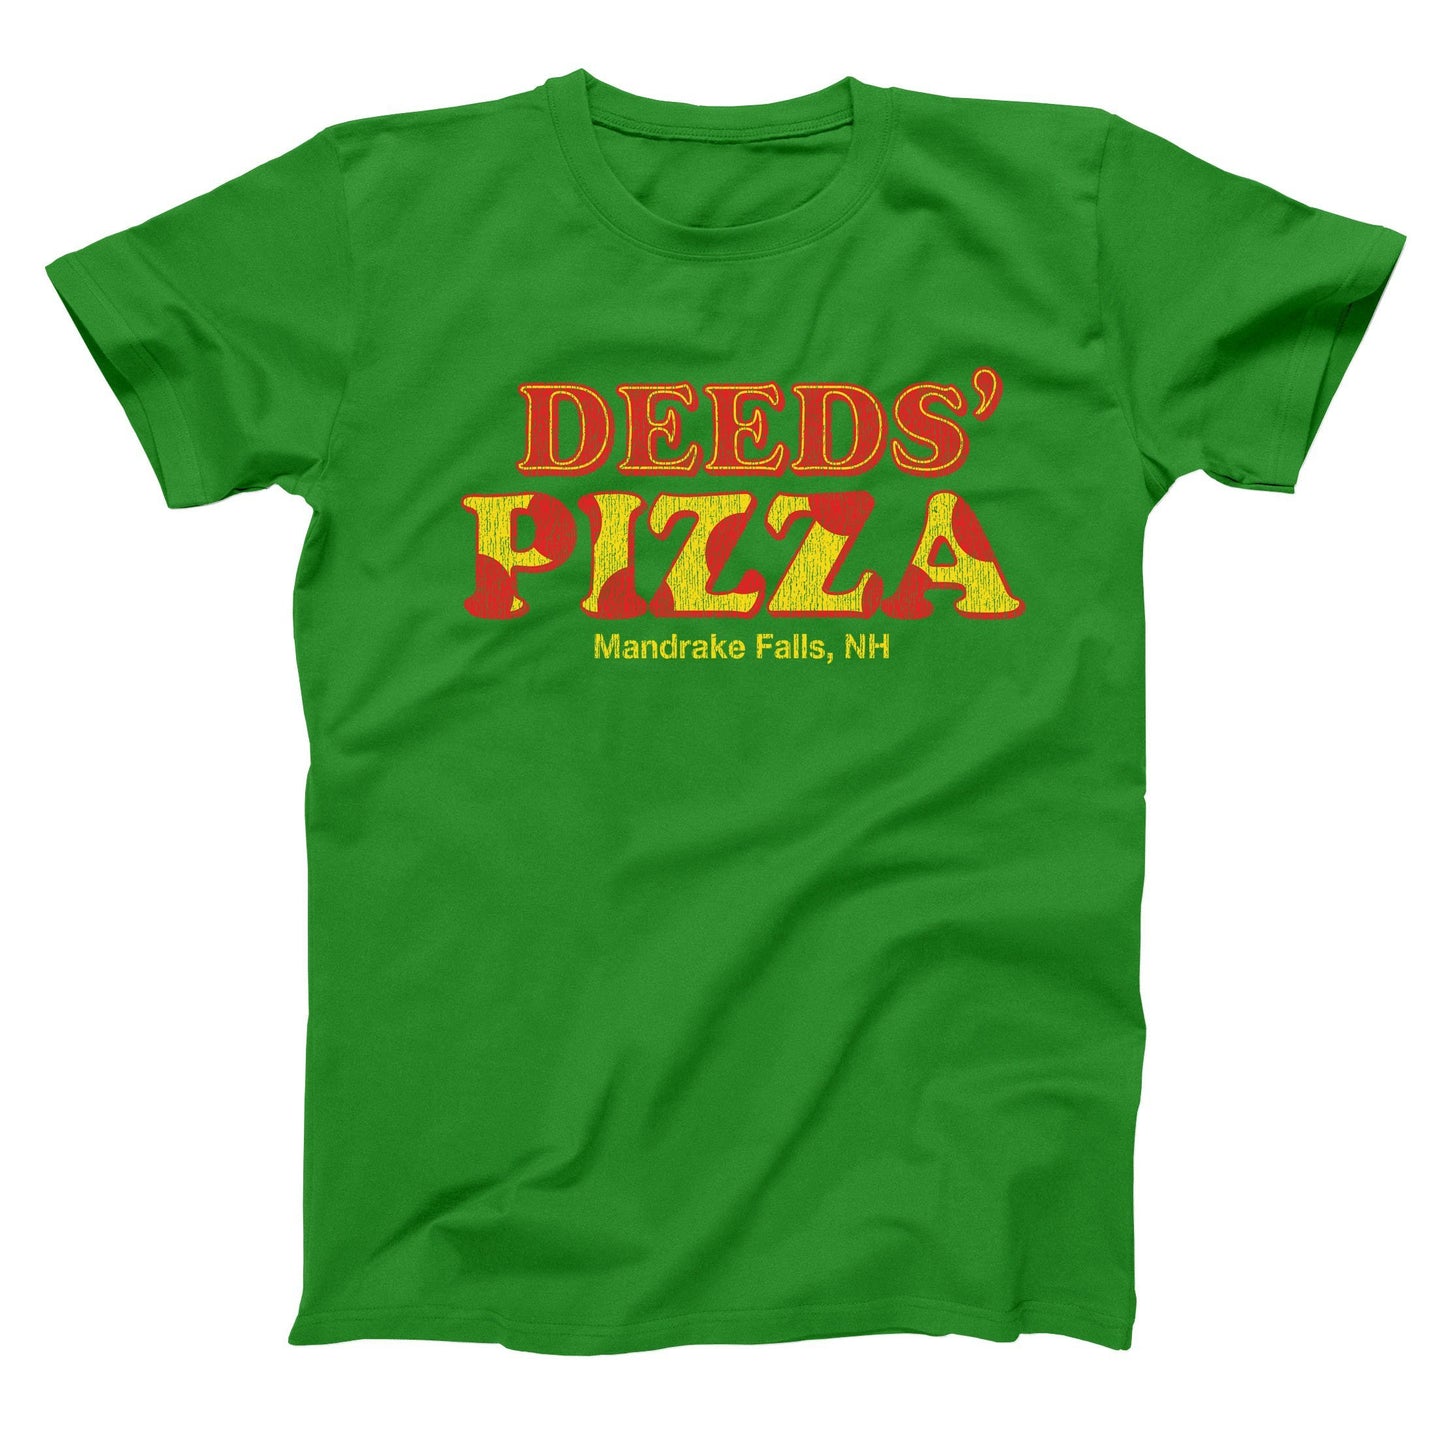 Deed's Pizza Shop Men's T-Shirt